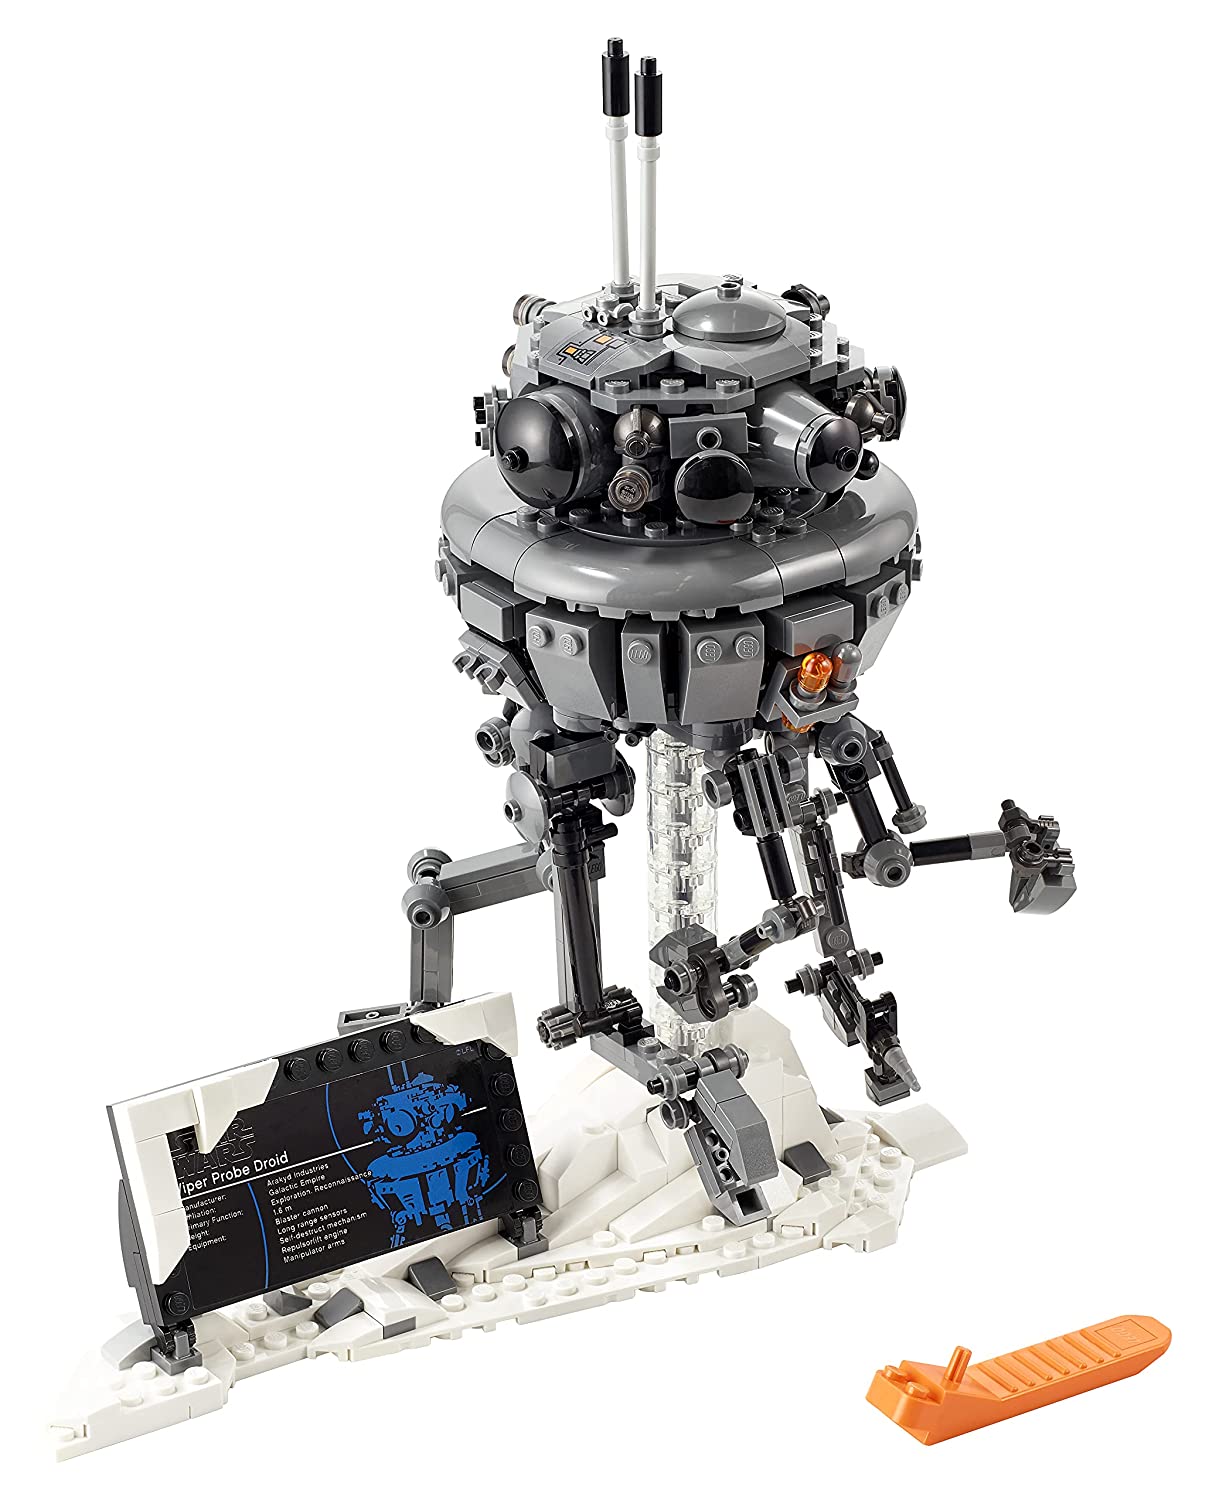 Imperial Probe Droid™: 75306 Star Wars™ - 683 PCS | LEGO®